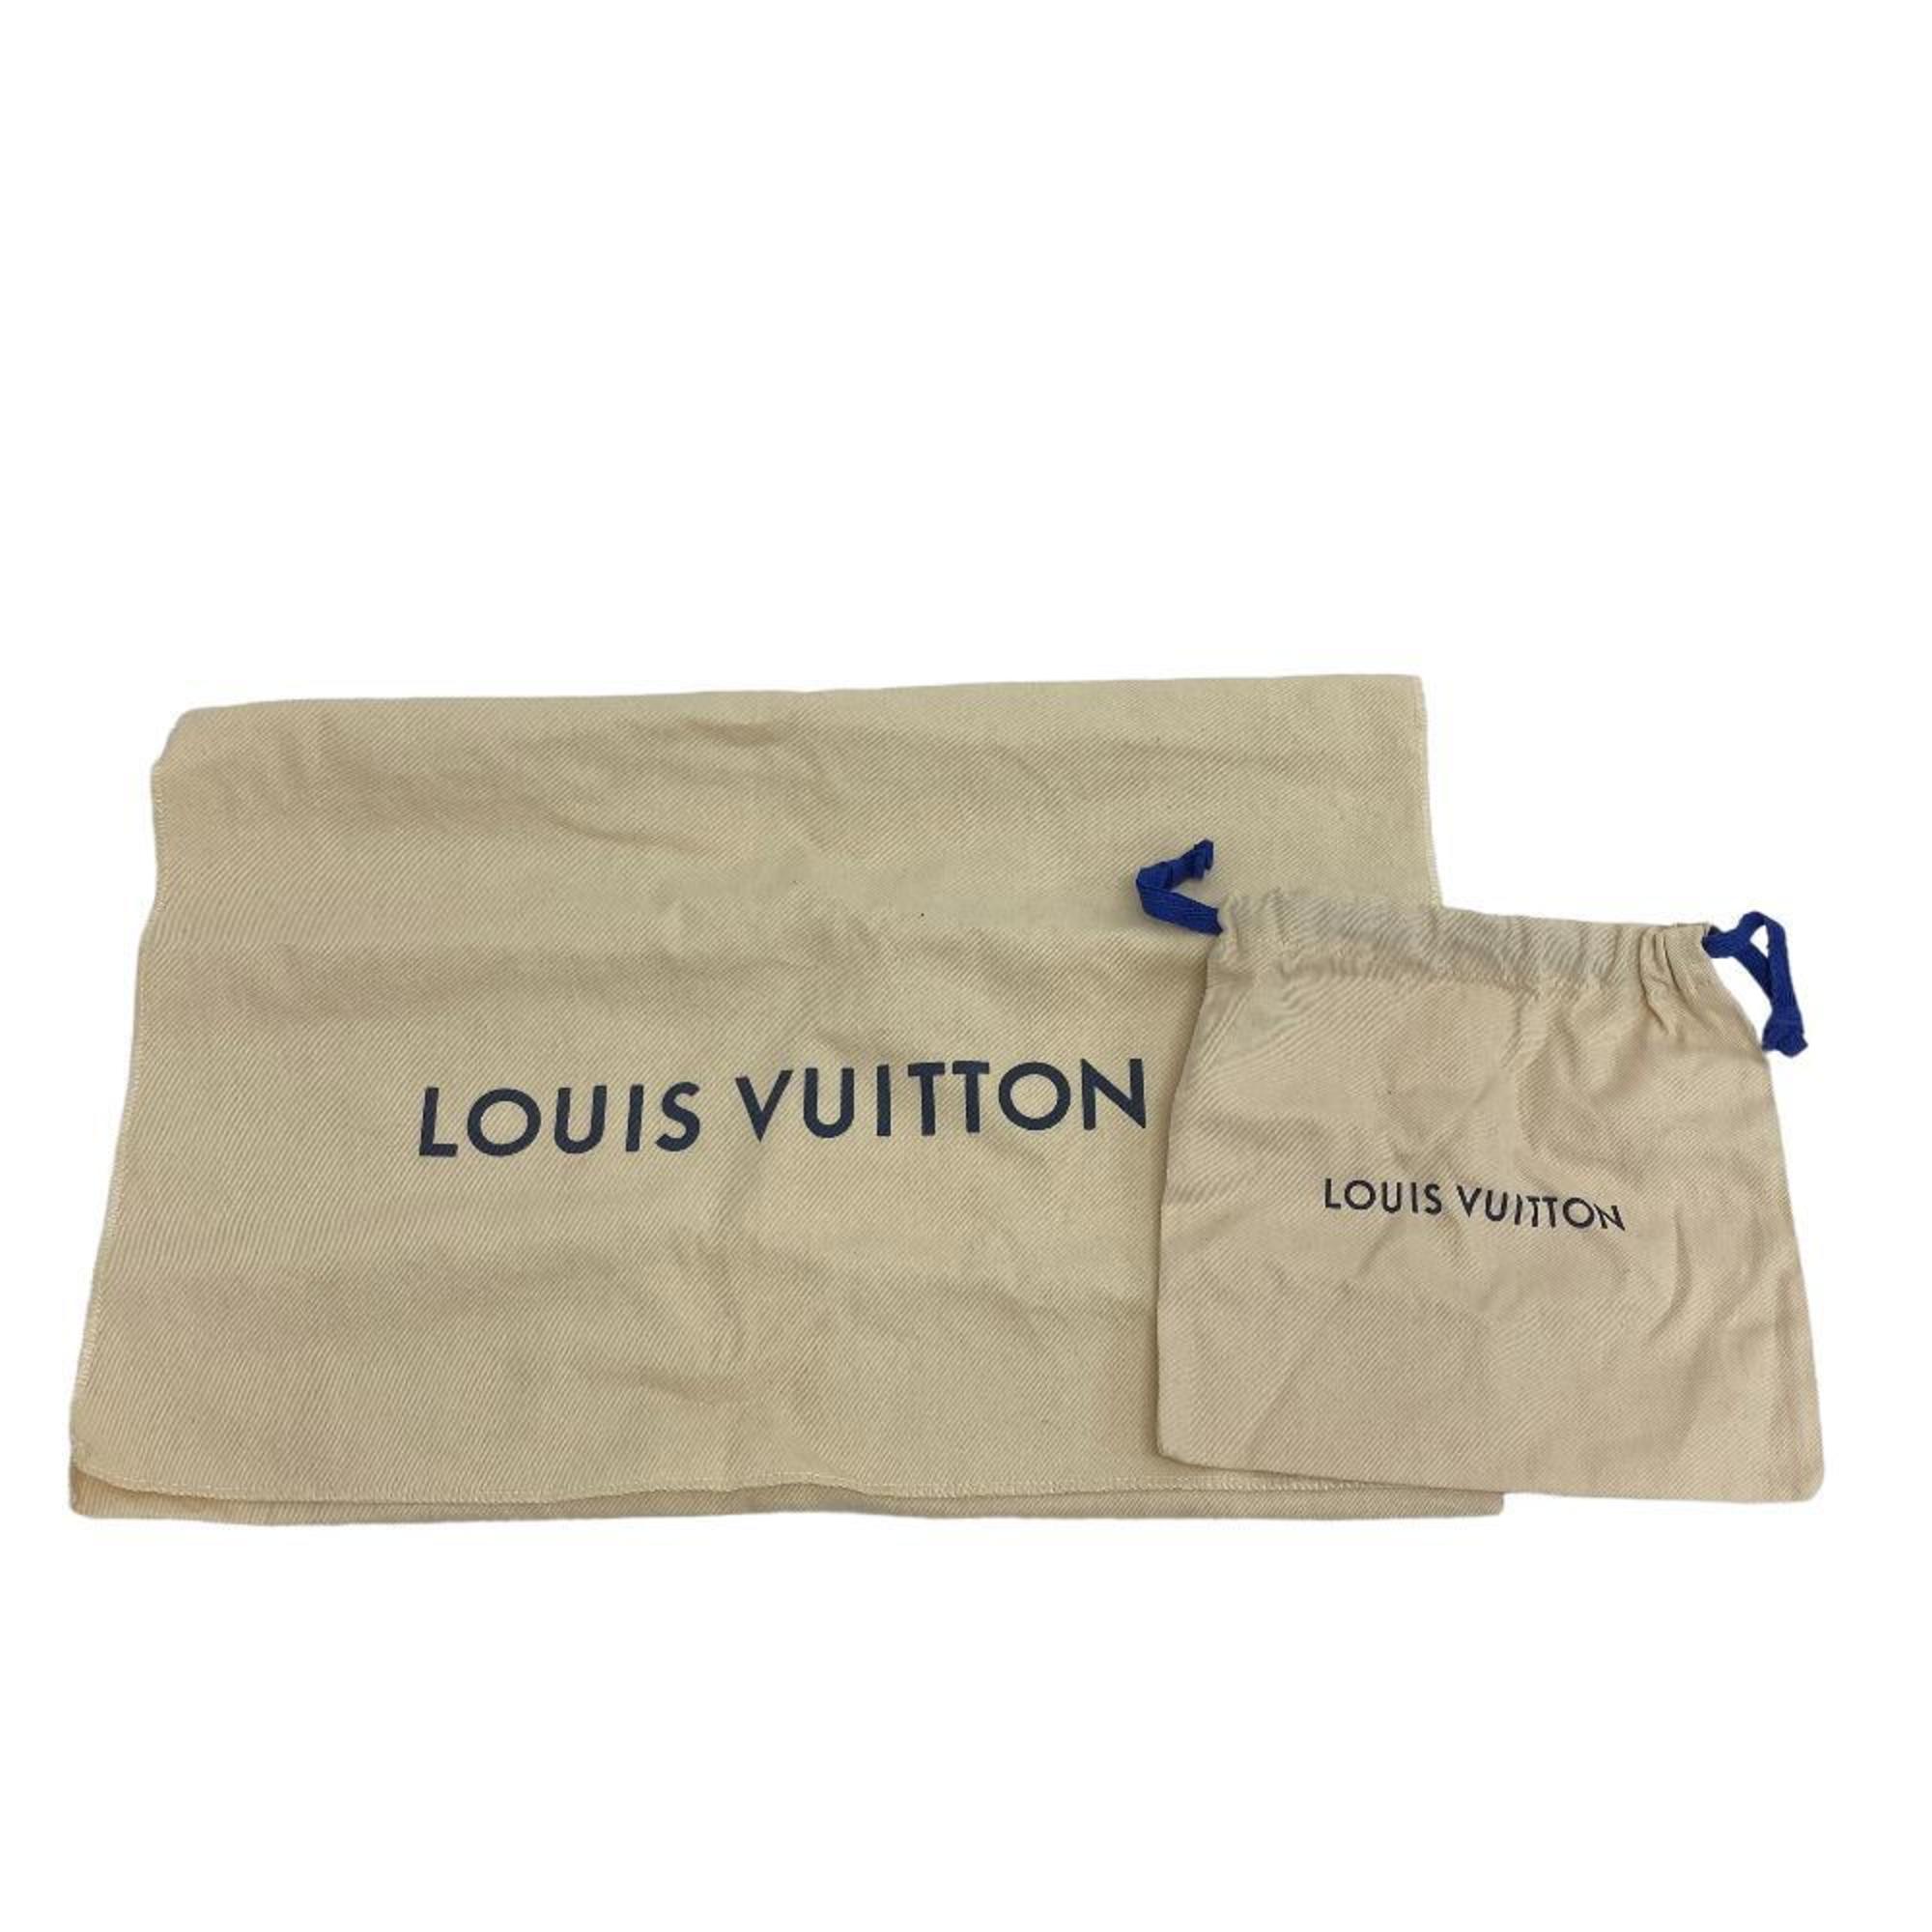 LOUIS VUITTON M51950 Mahina PM 2way shoulder bag hand handbag beige ladies Z0005099